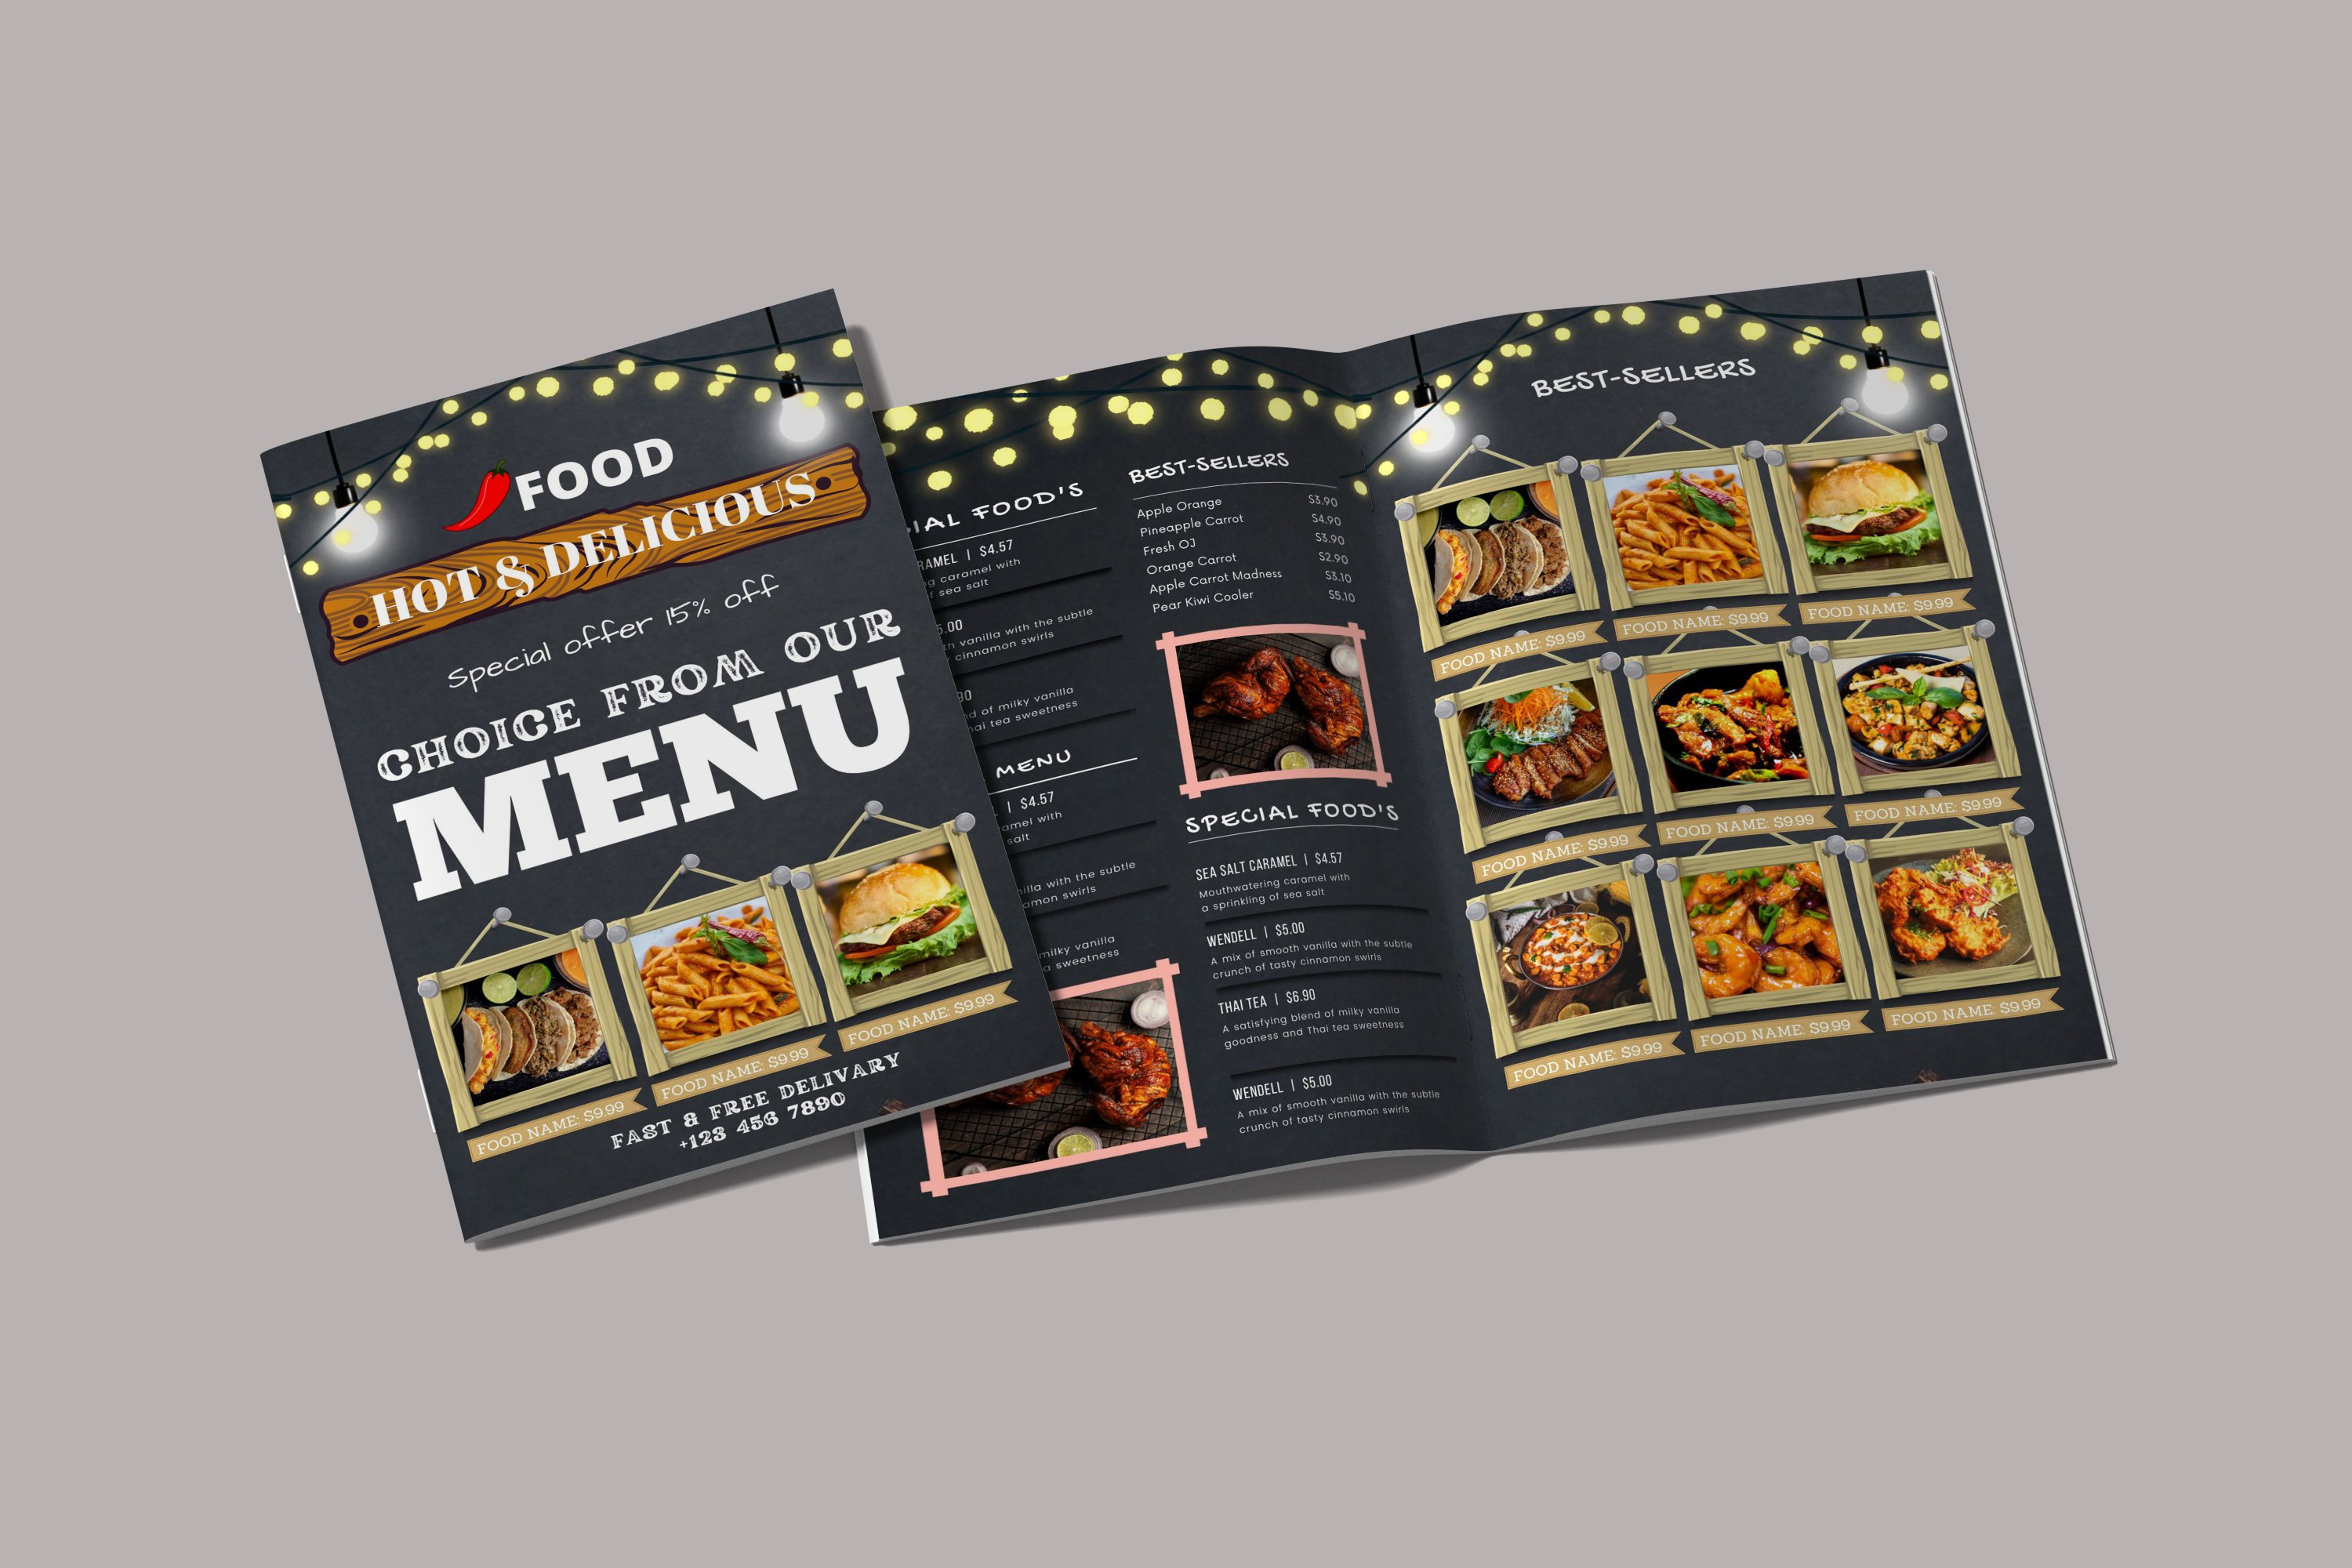 BiFold Food Menu Brochure Template cover image.